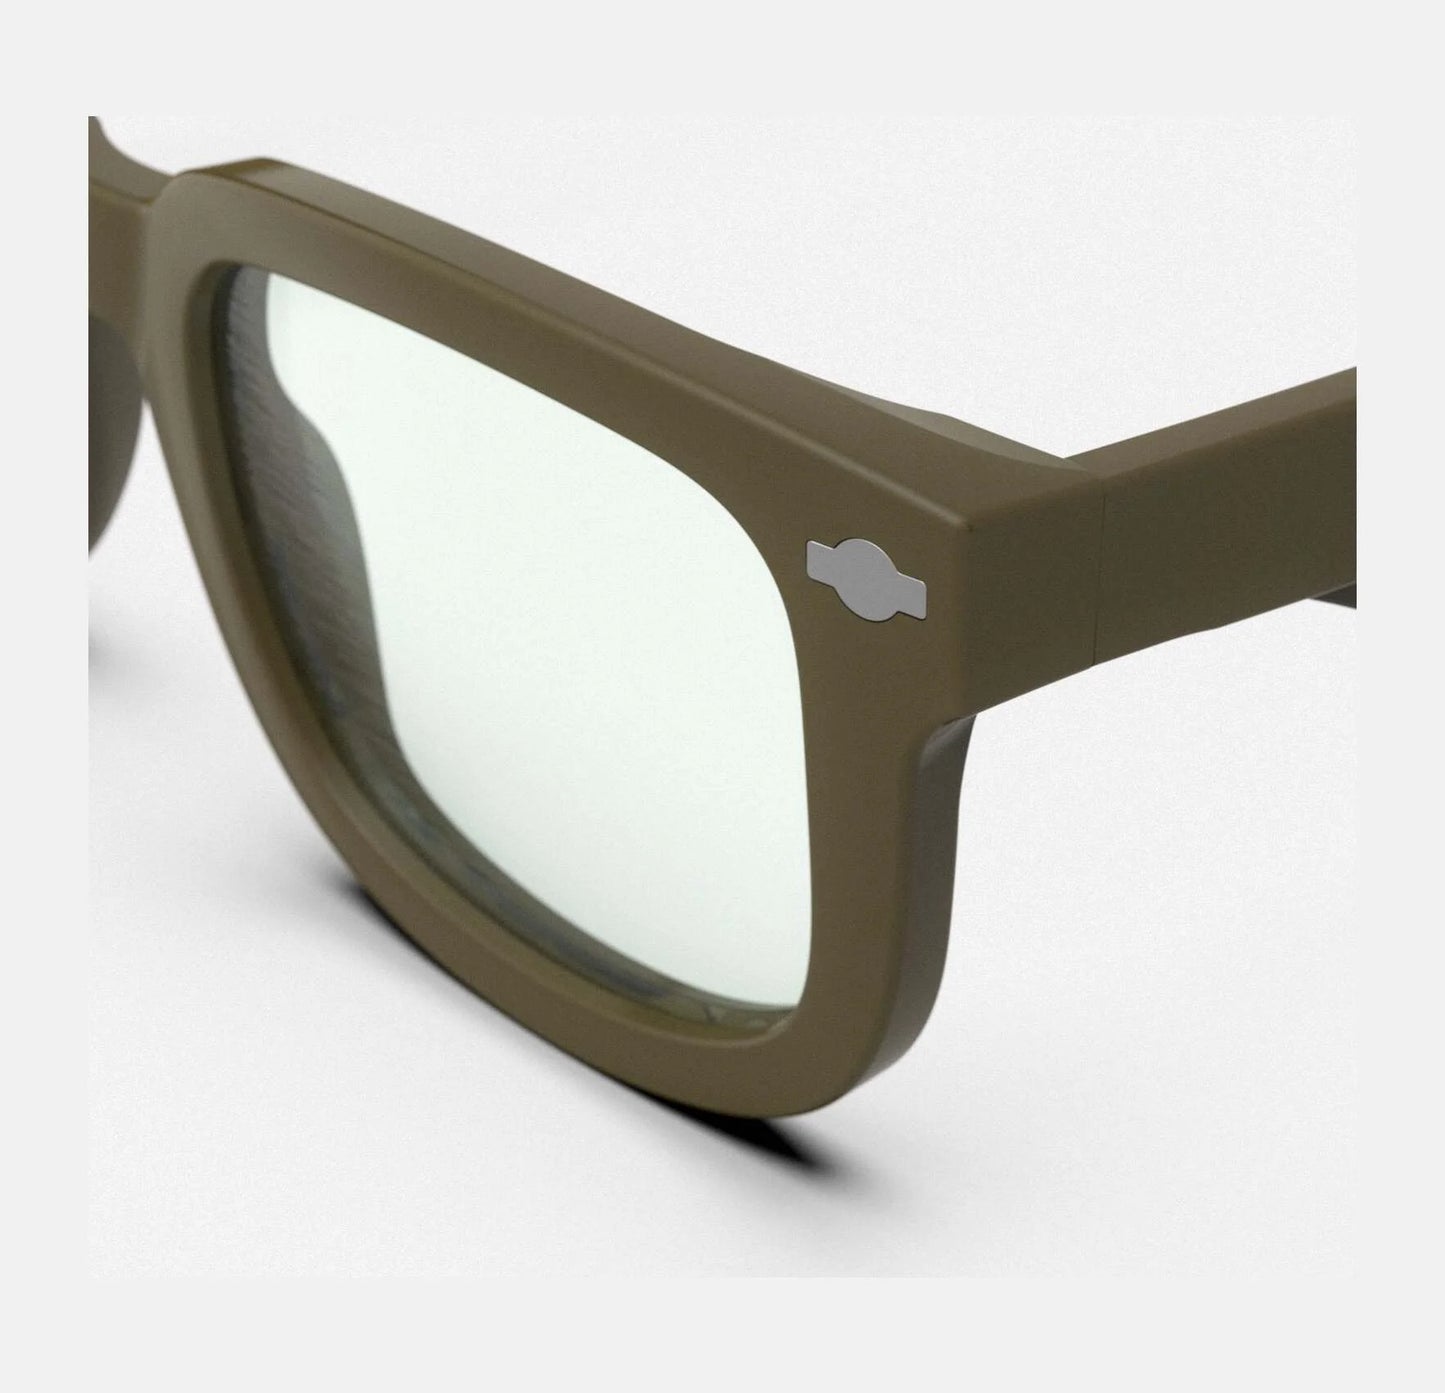 Randolph x BKC Sunglasses | Size 50